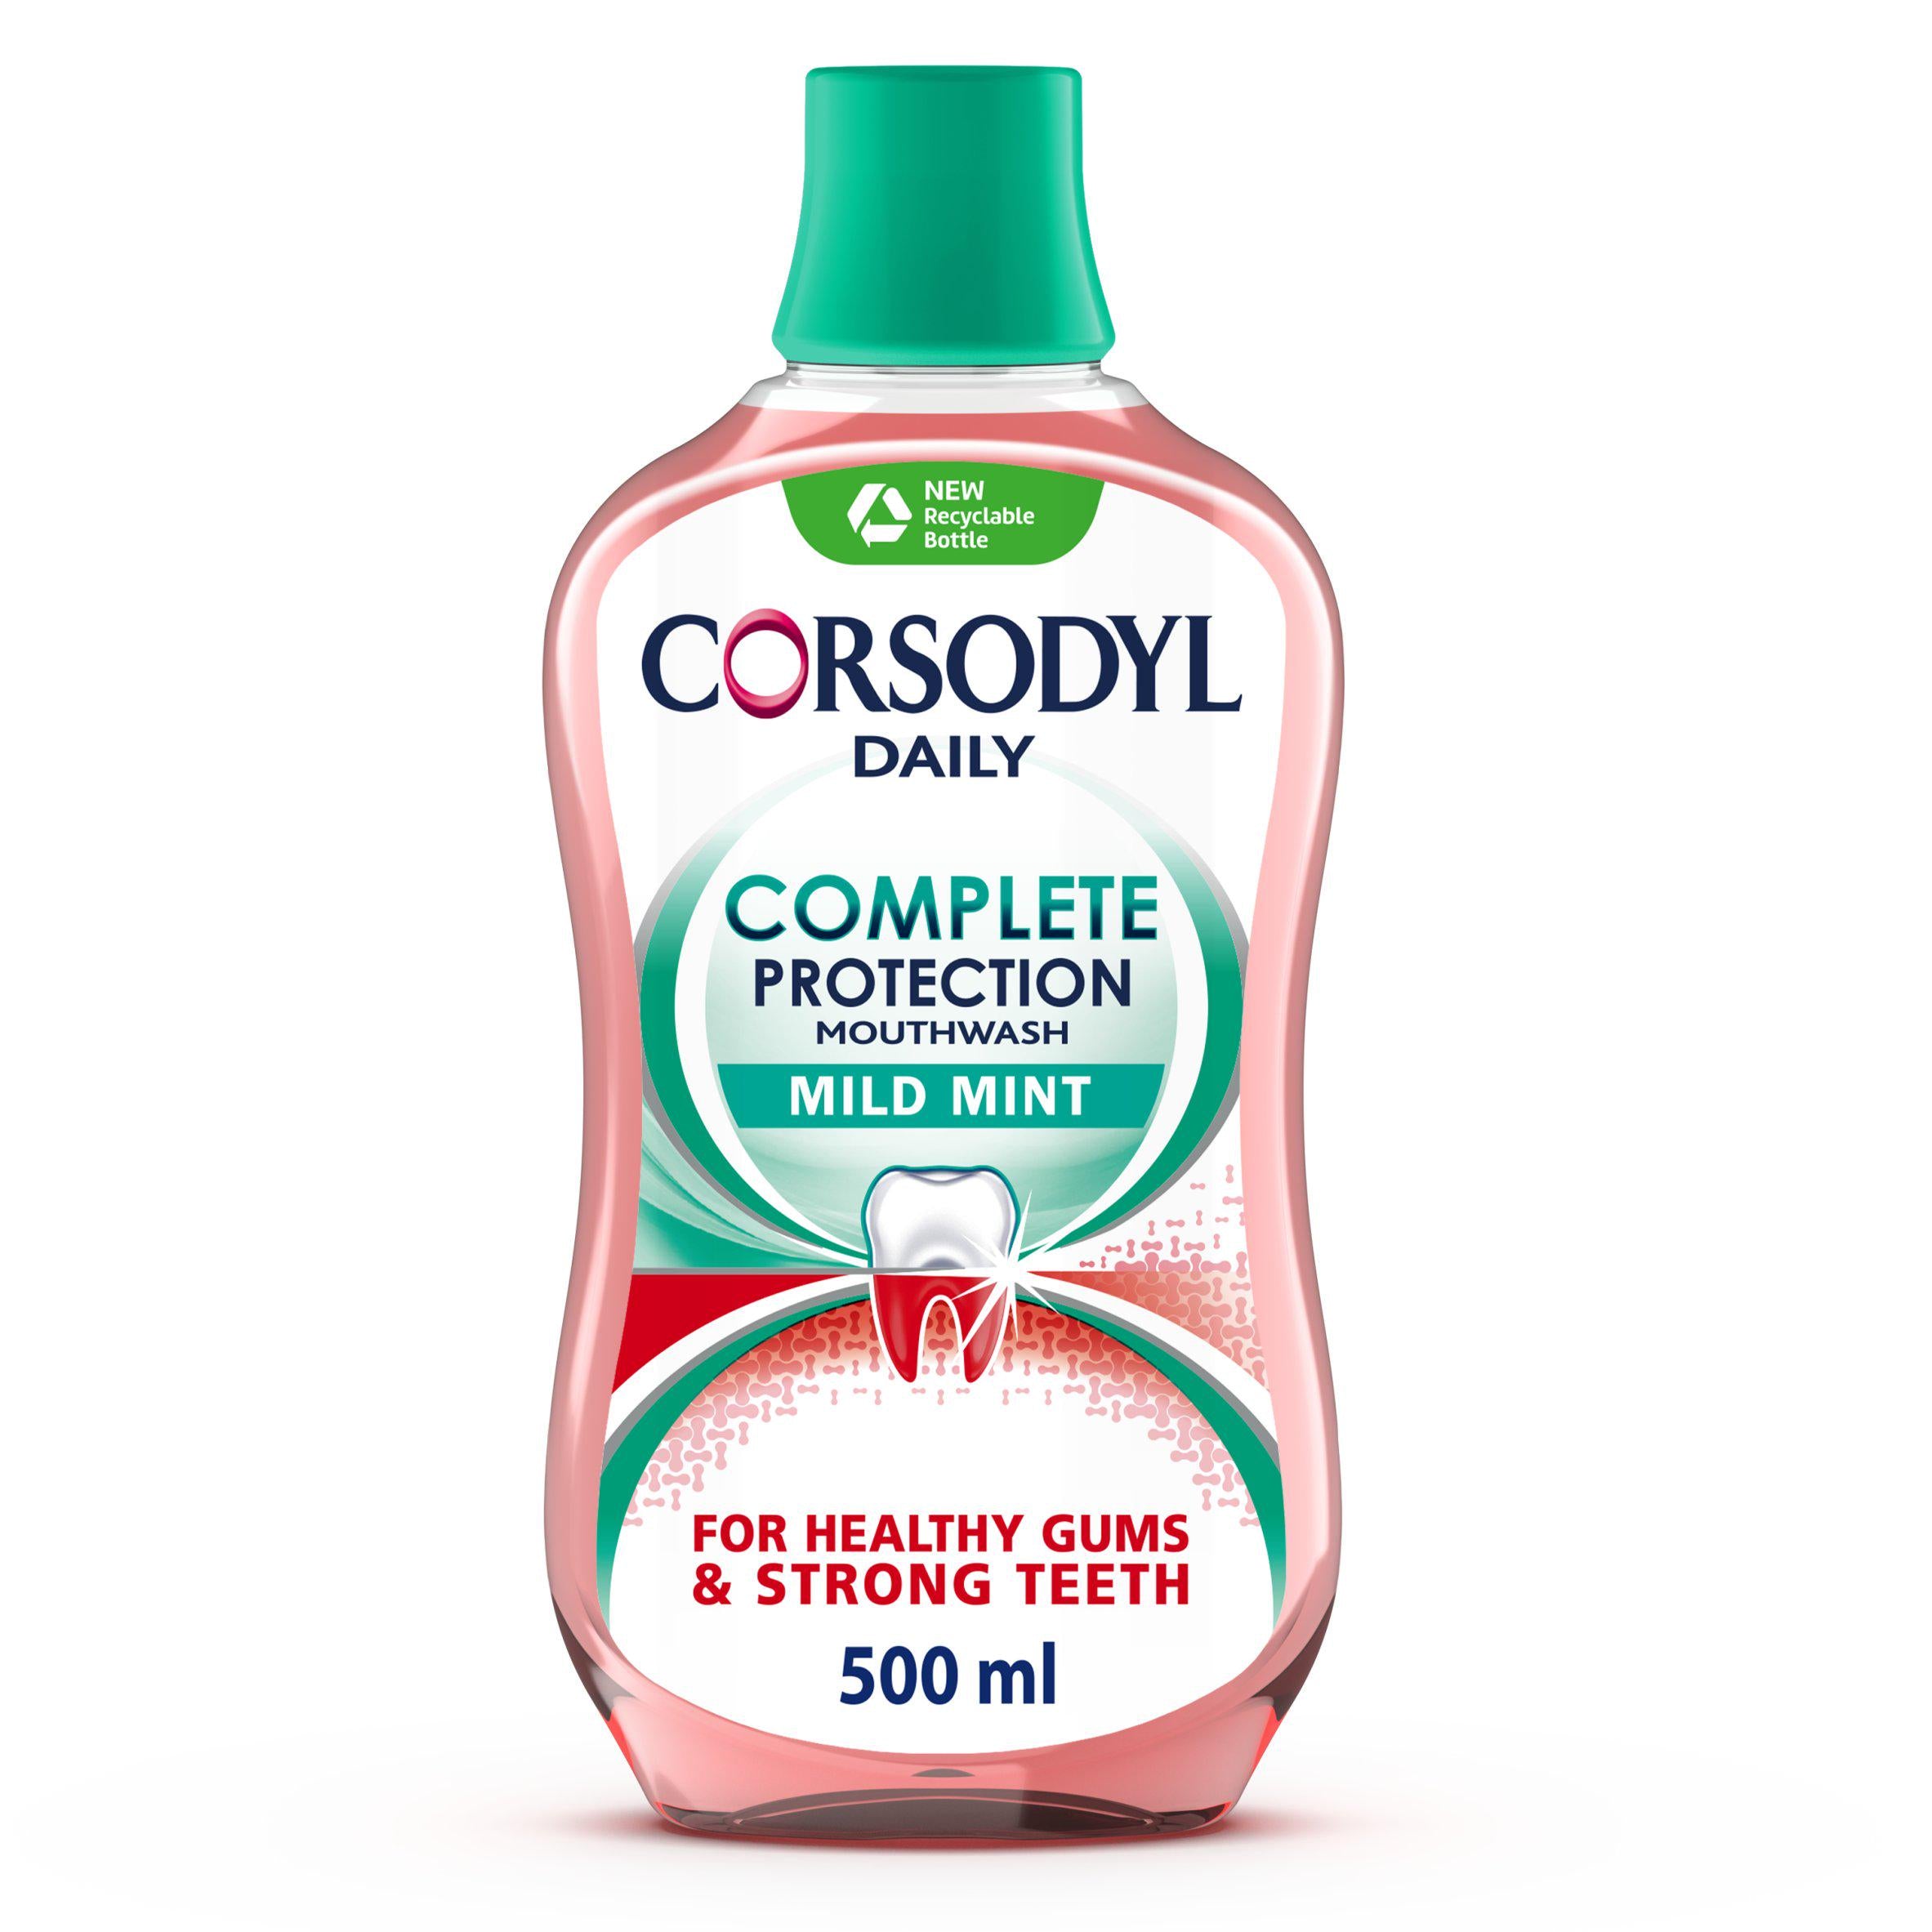 Corsodyl Mild Mint Complete Protection Daily Mouthwash 500ml mouthwash Sainsburys   